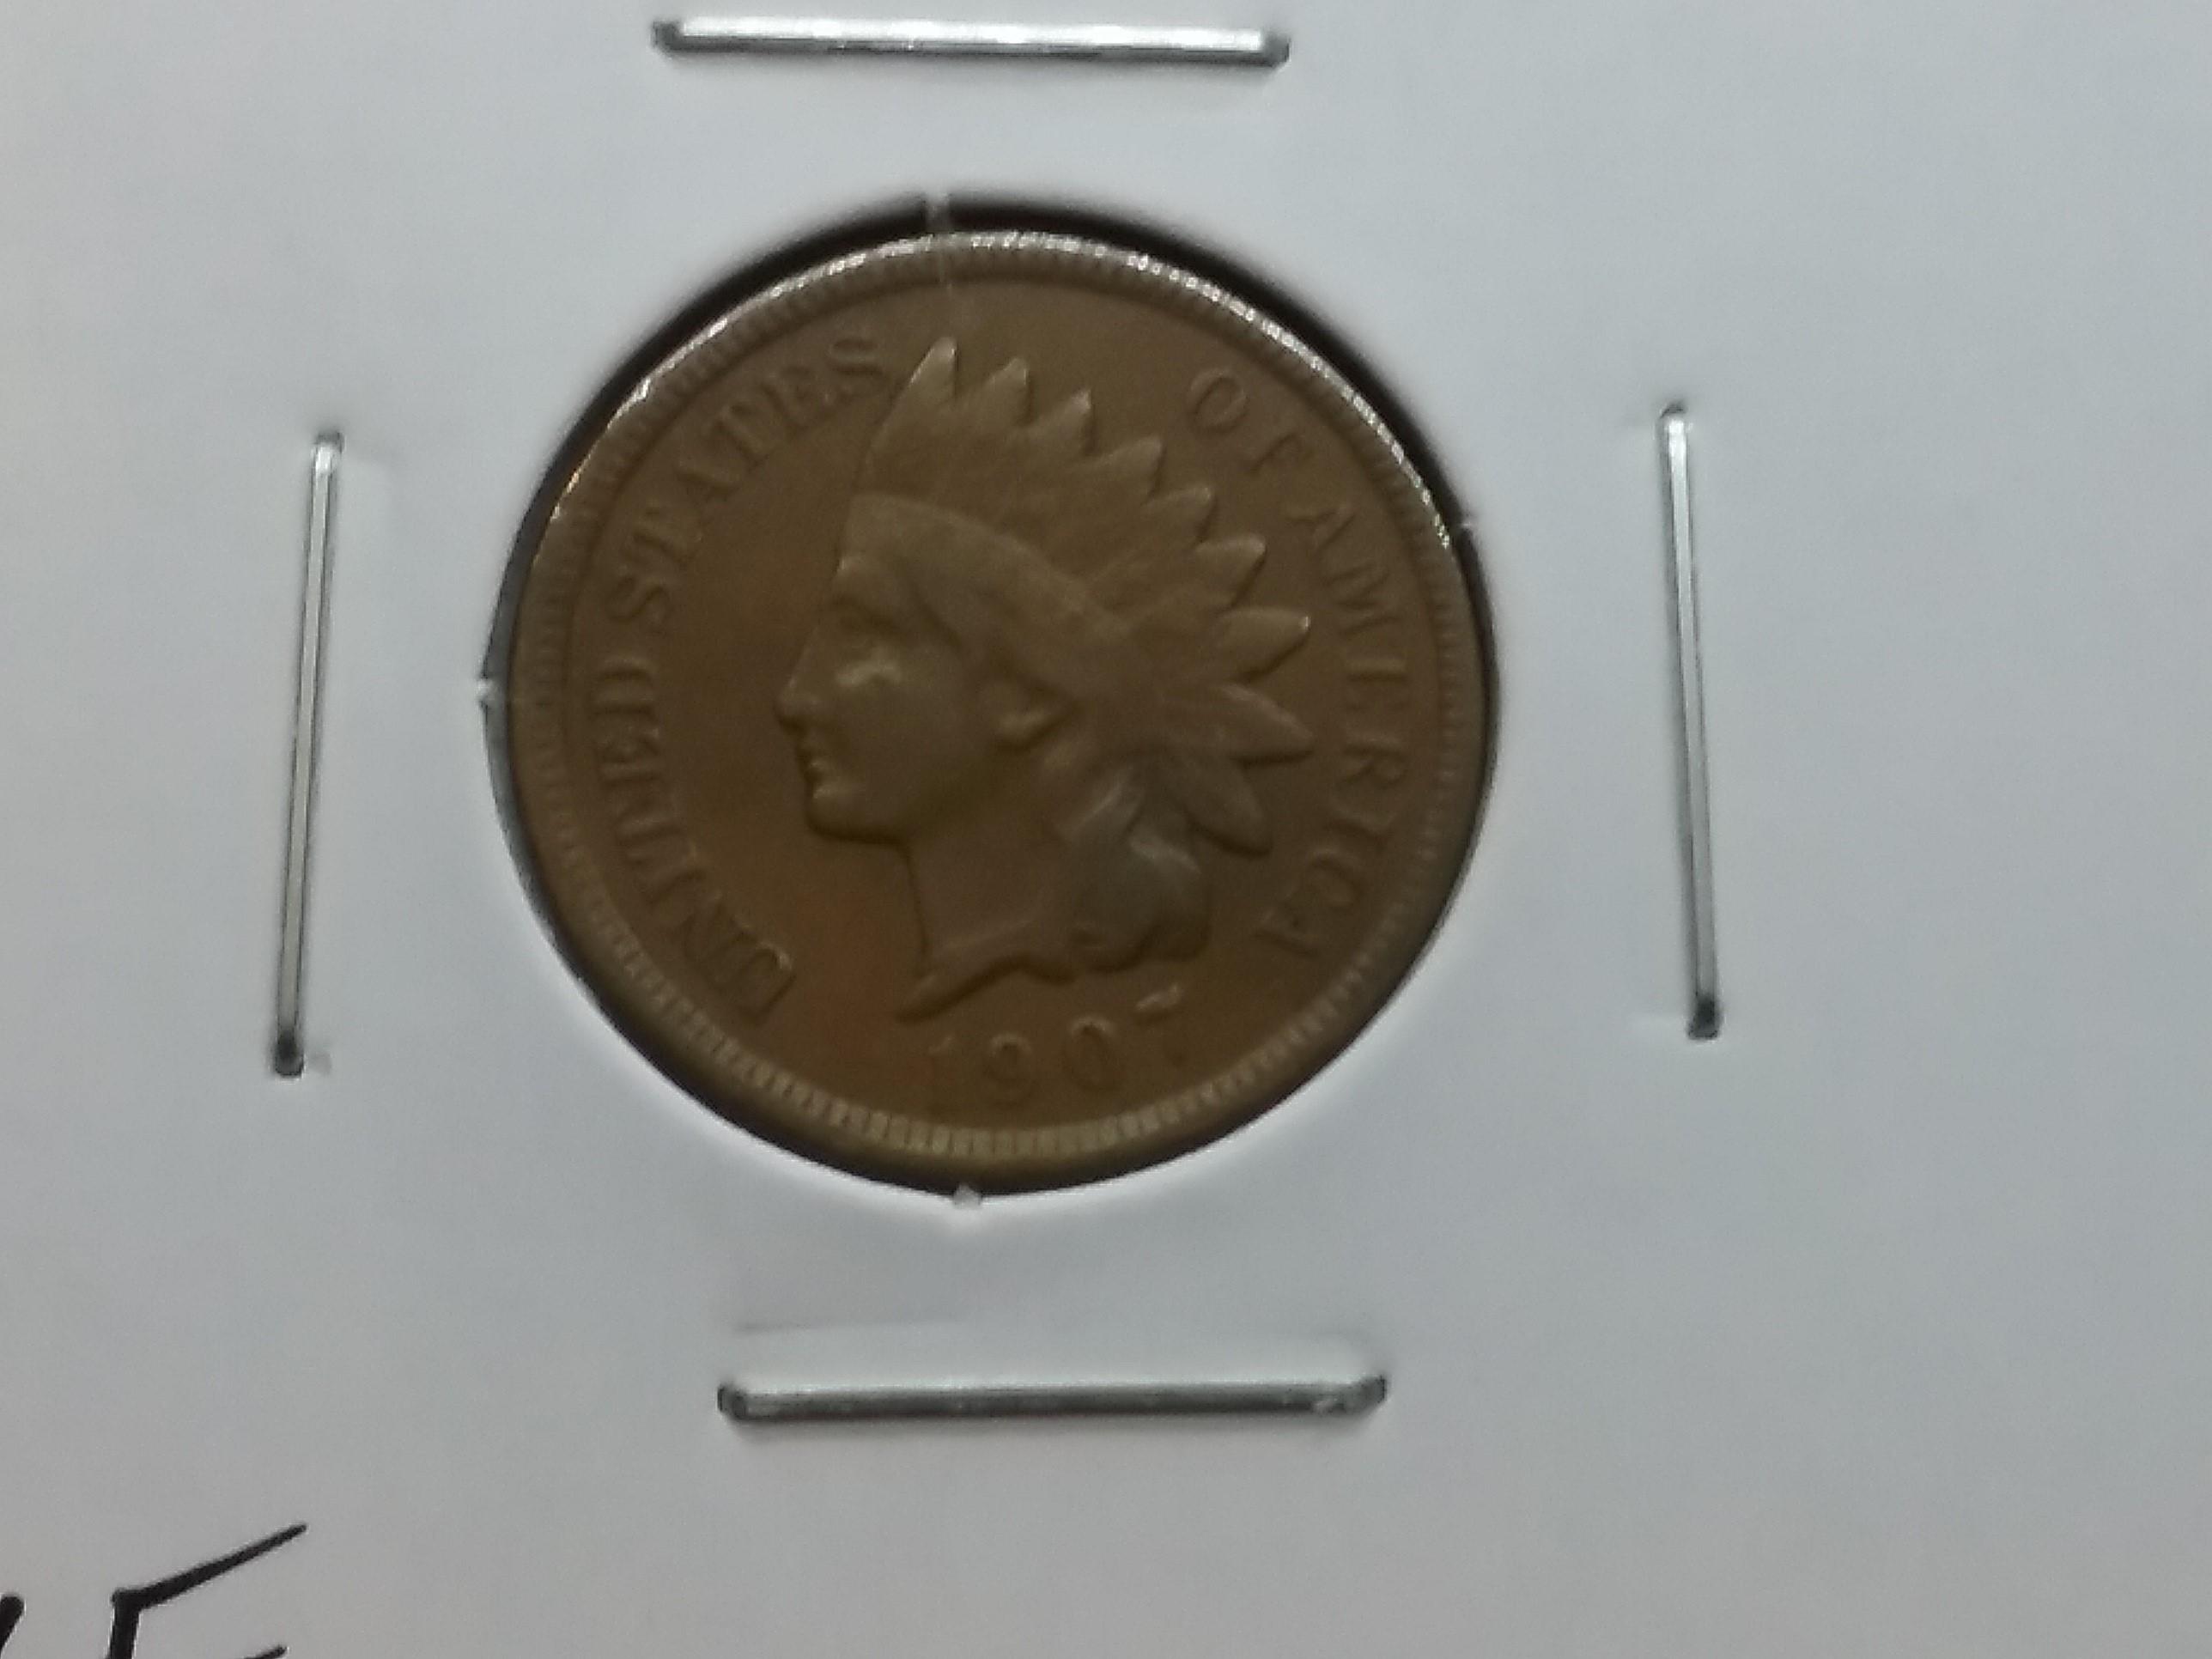 Three decenter Indian cents